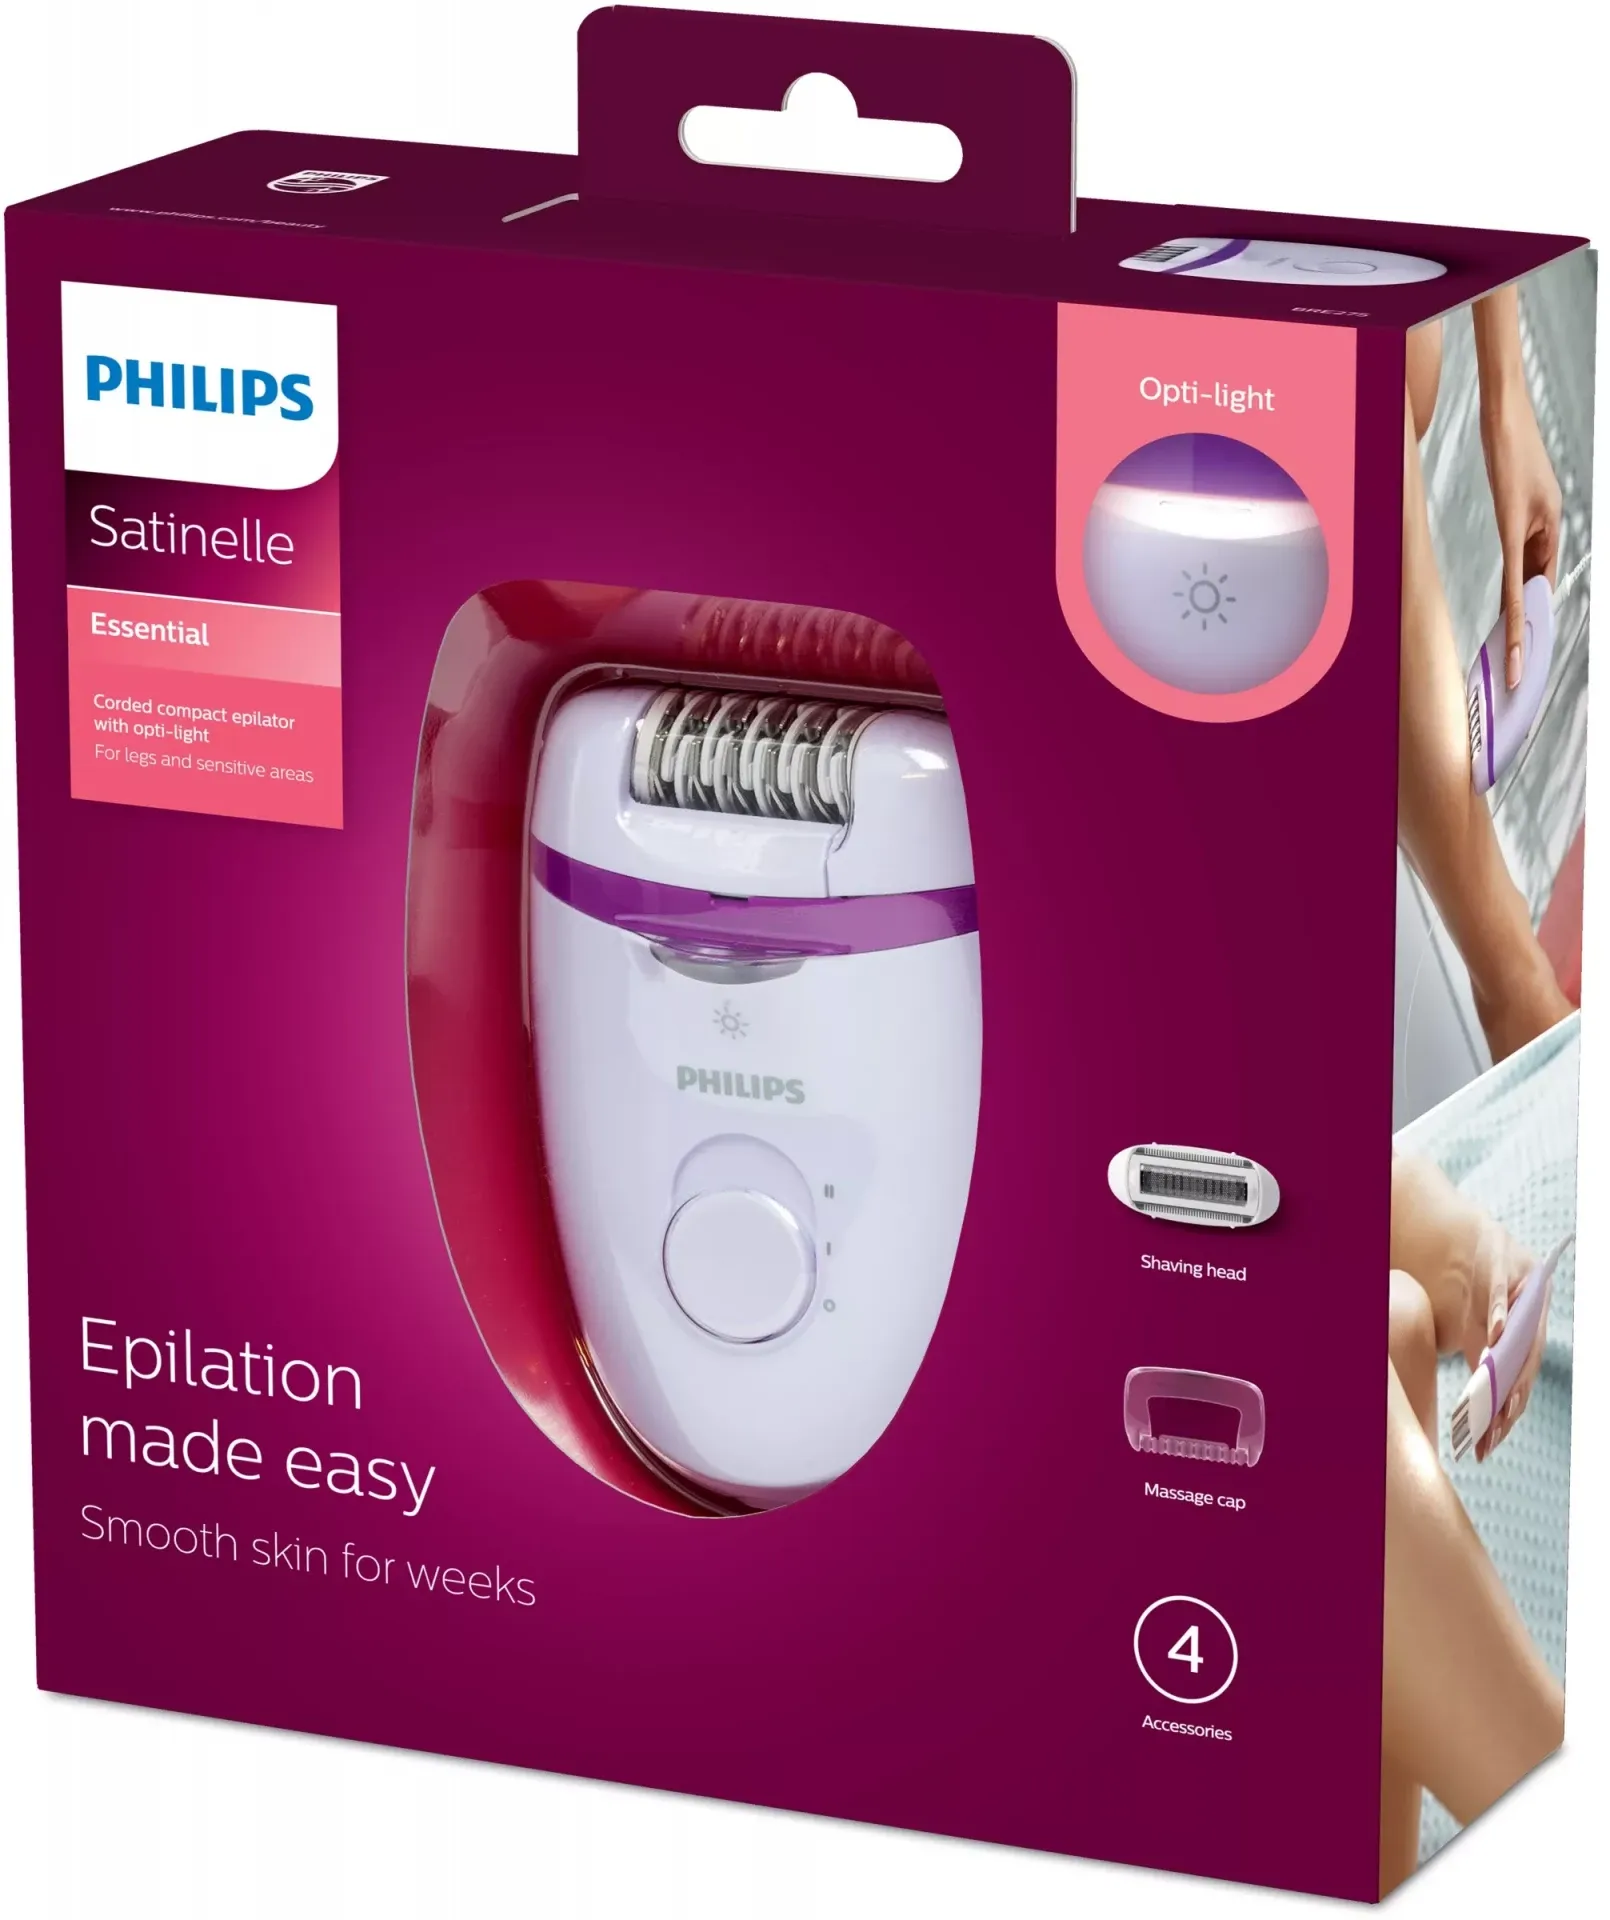 Эпилятор для женщин Satinelle Essential Philips BRE275/00,4 аксессуара#1